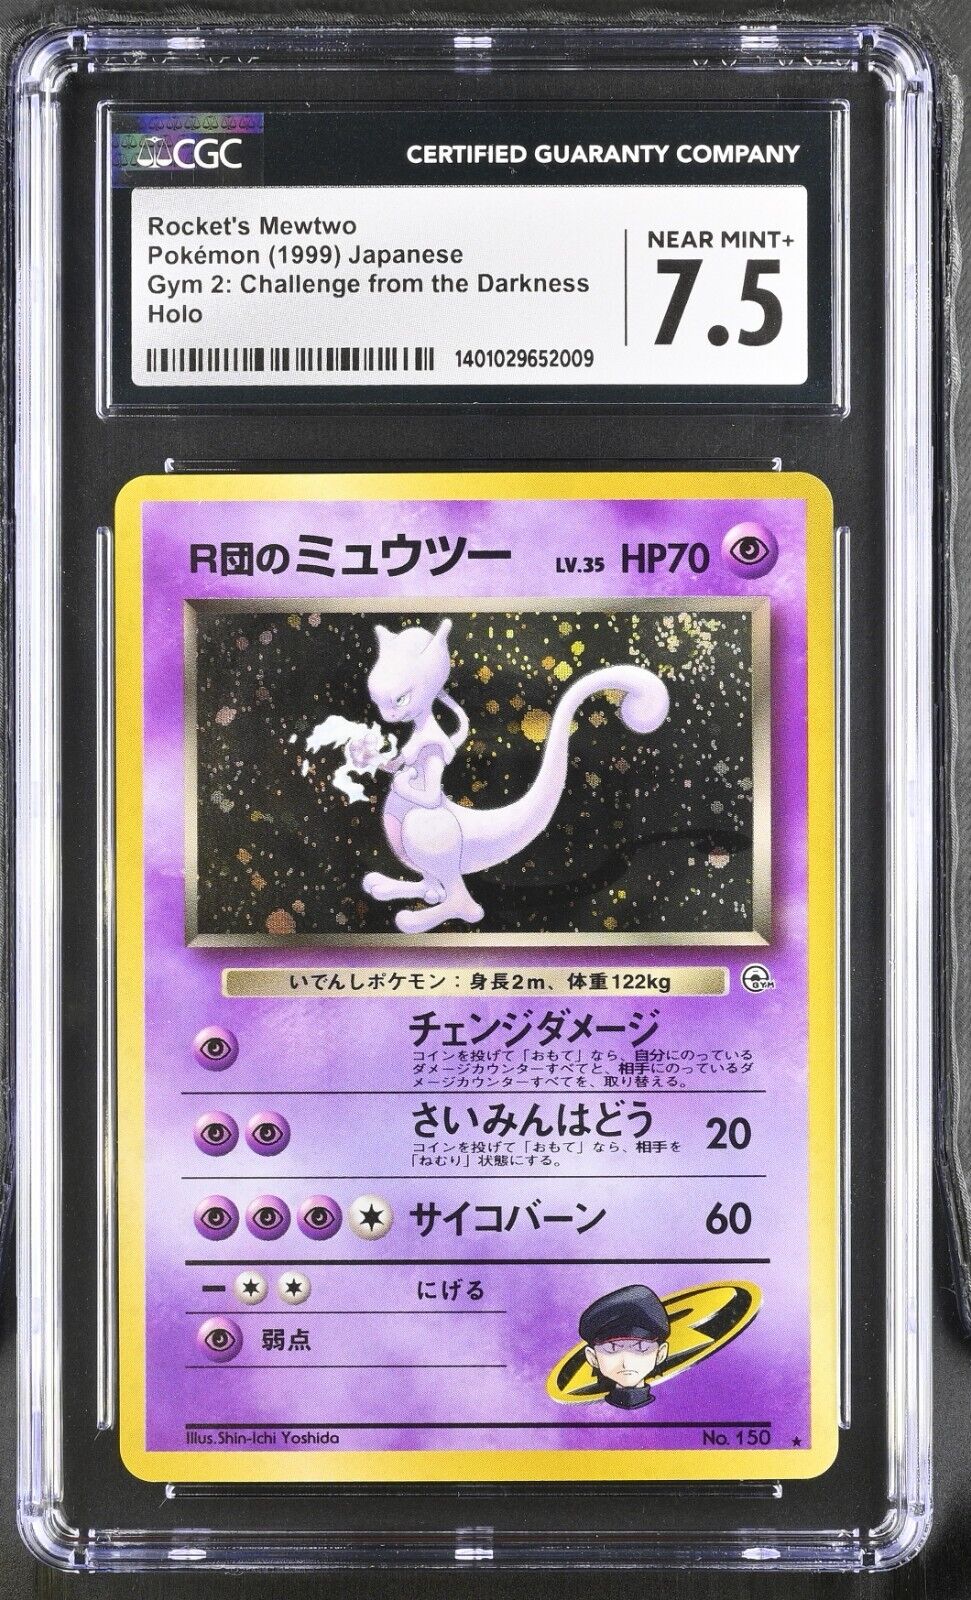 Pokémon Rocket\'s Mewtwo 1999 Japanese Gym Challenge 150 Holo CGC Graded 7.5 Card